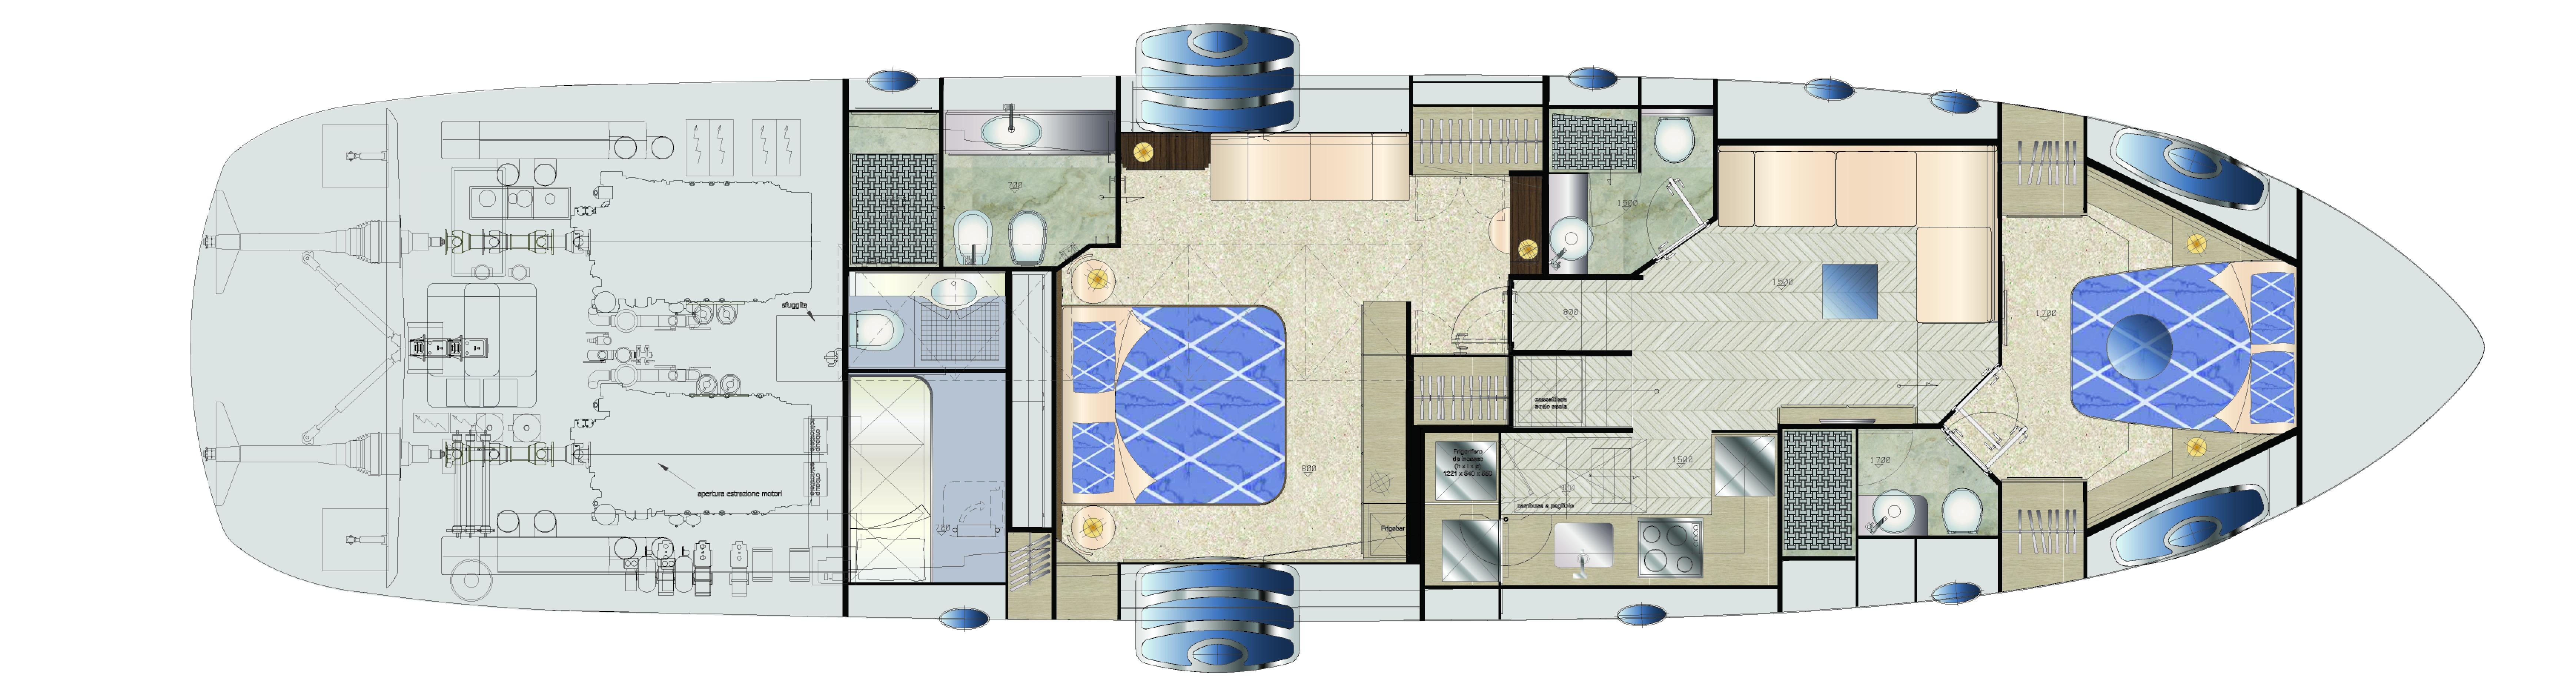 Manufacturer Provided Image: Pershing 70 Lower Deck Layout Plan